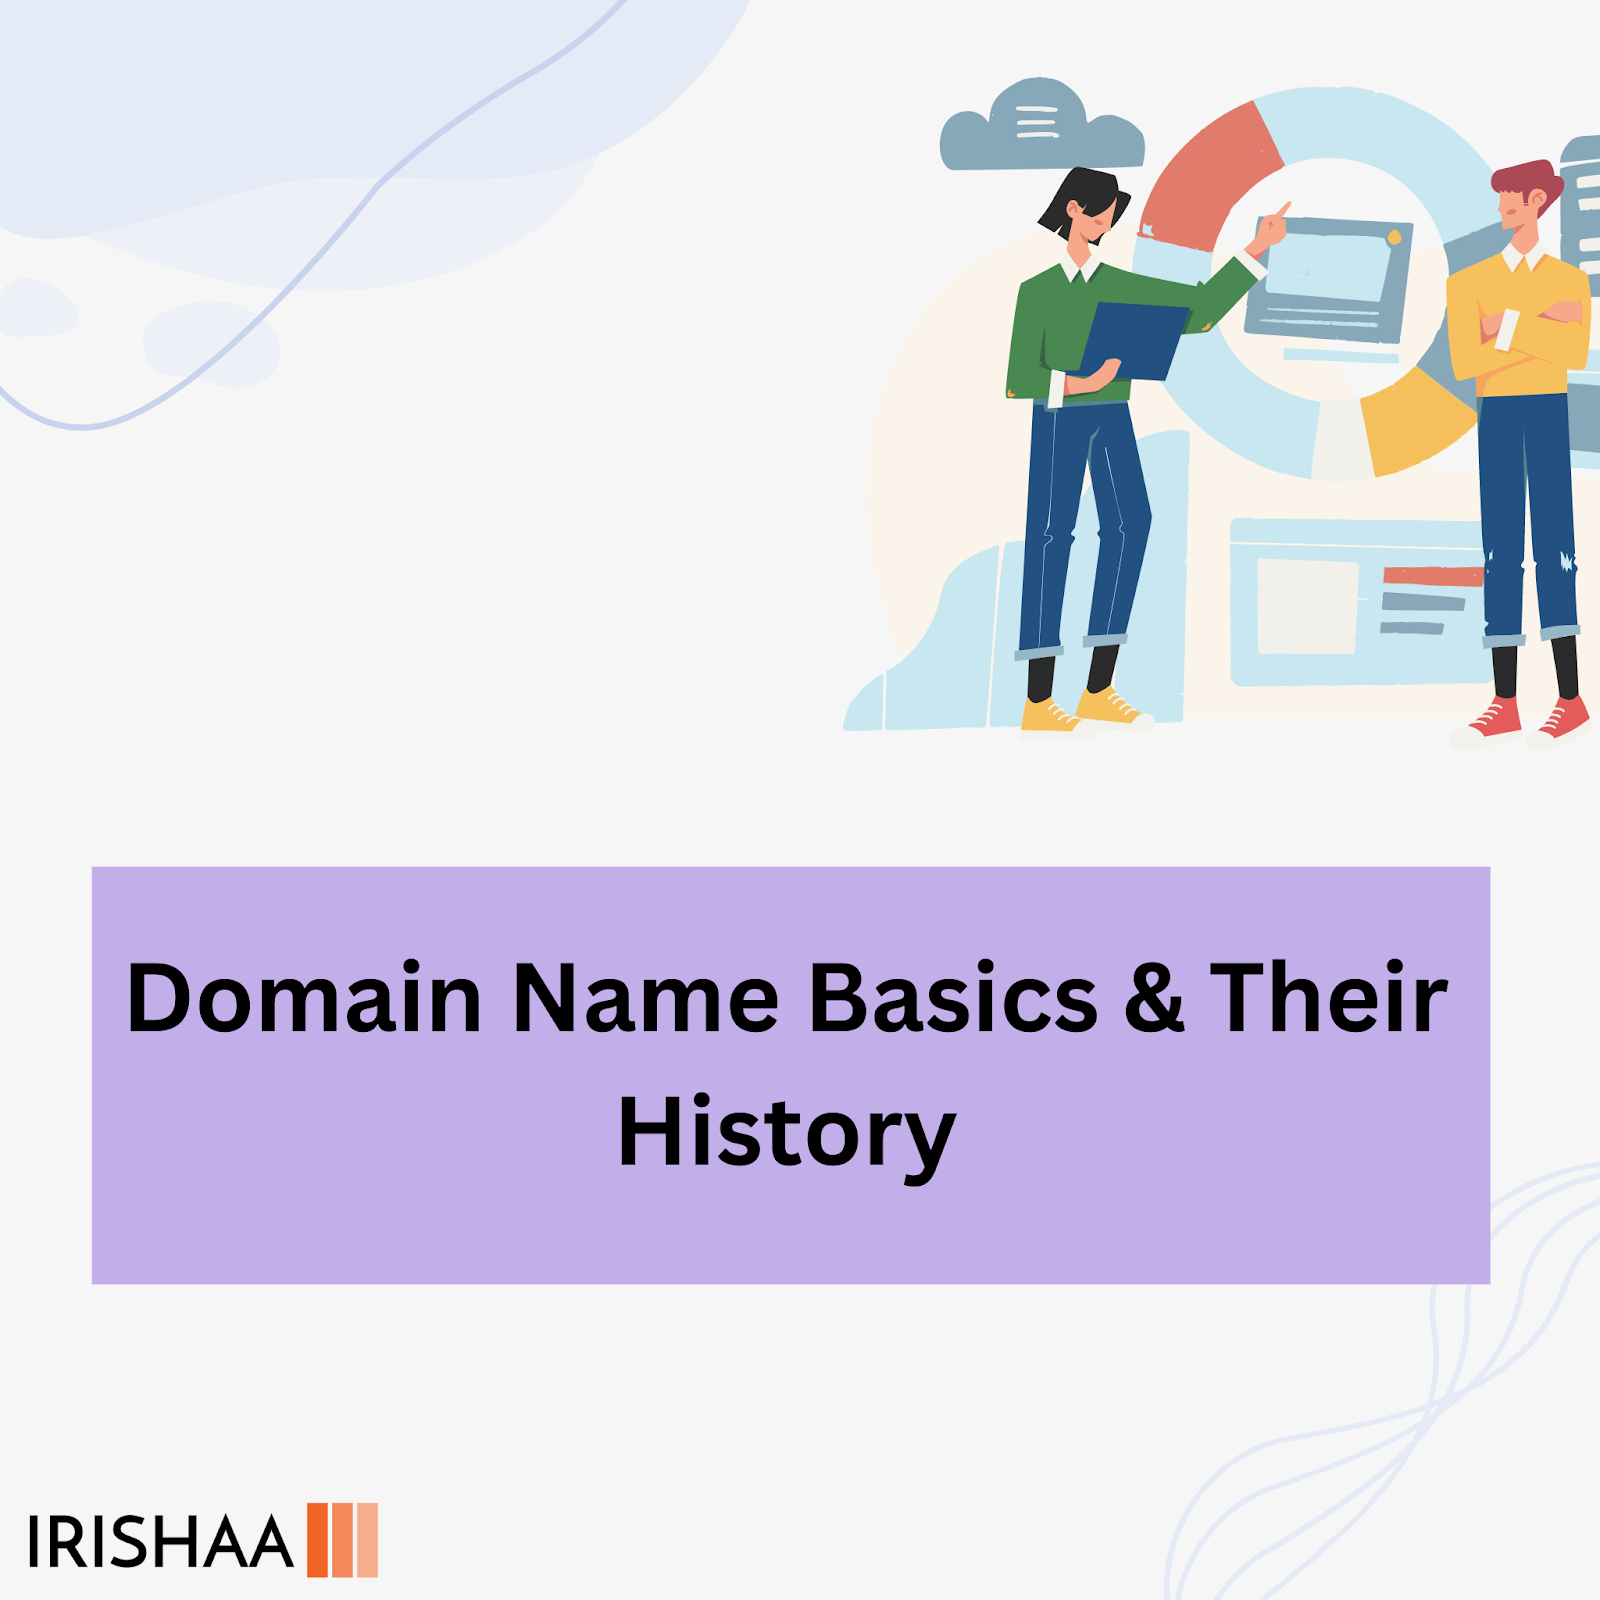 Domain Name Basics & Their History

